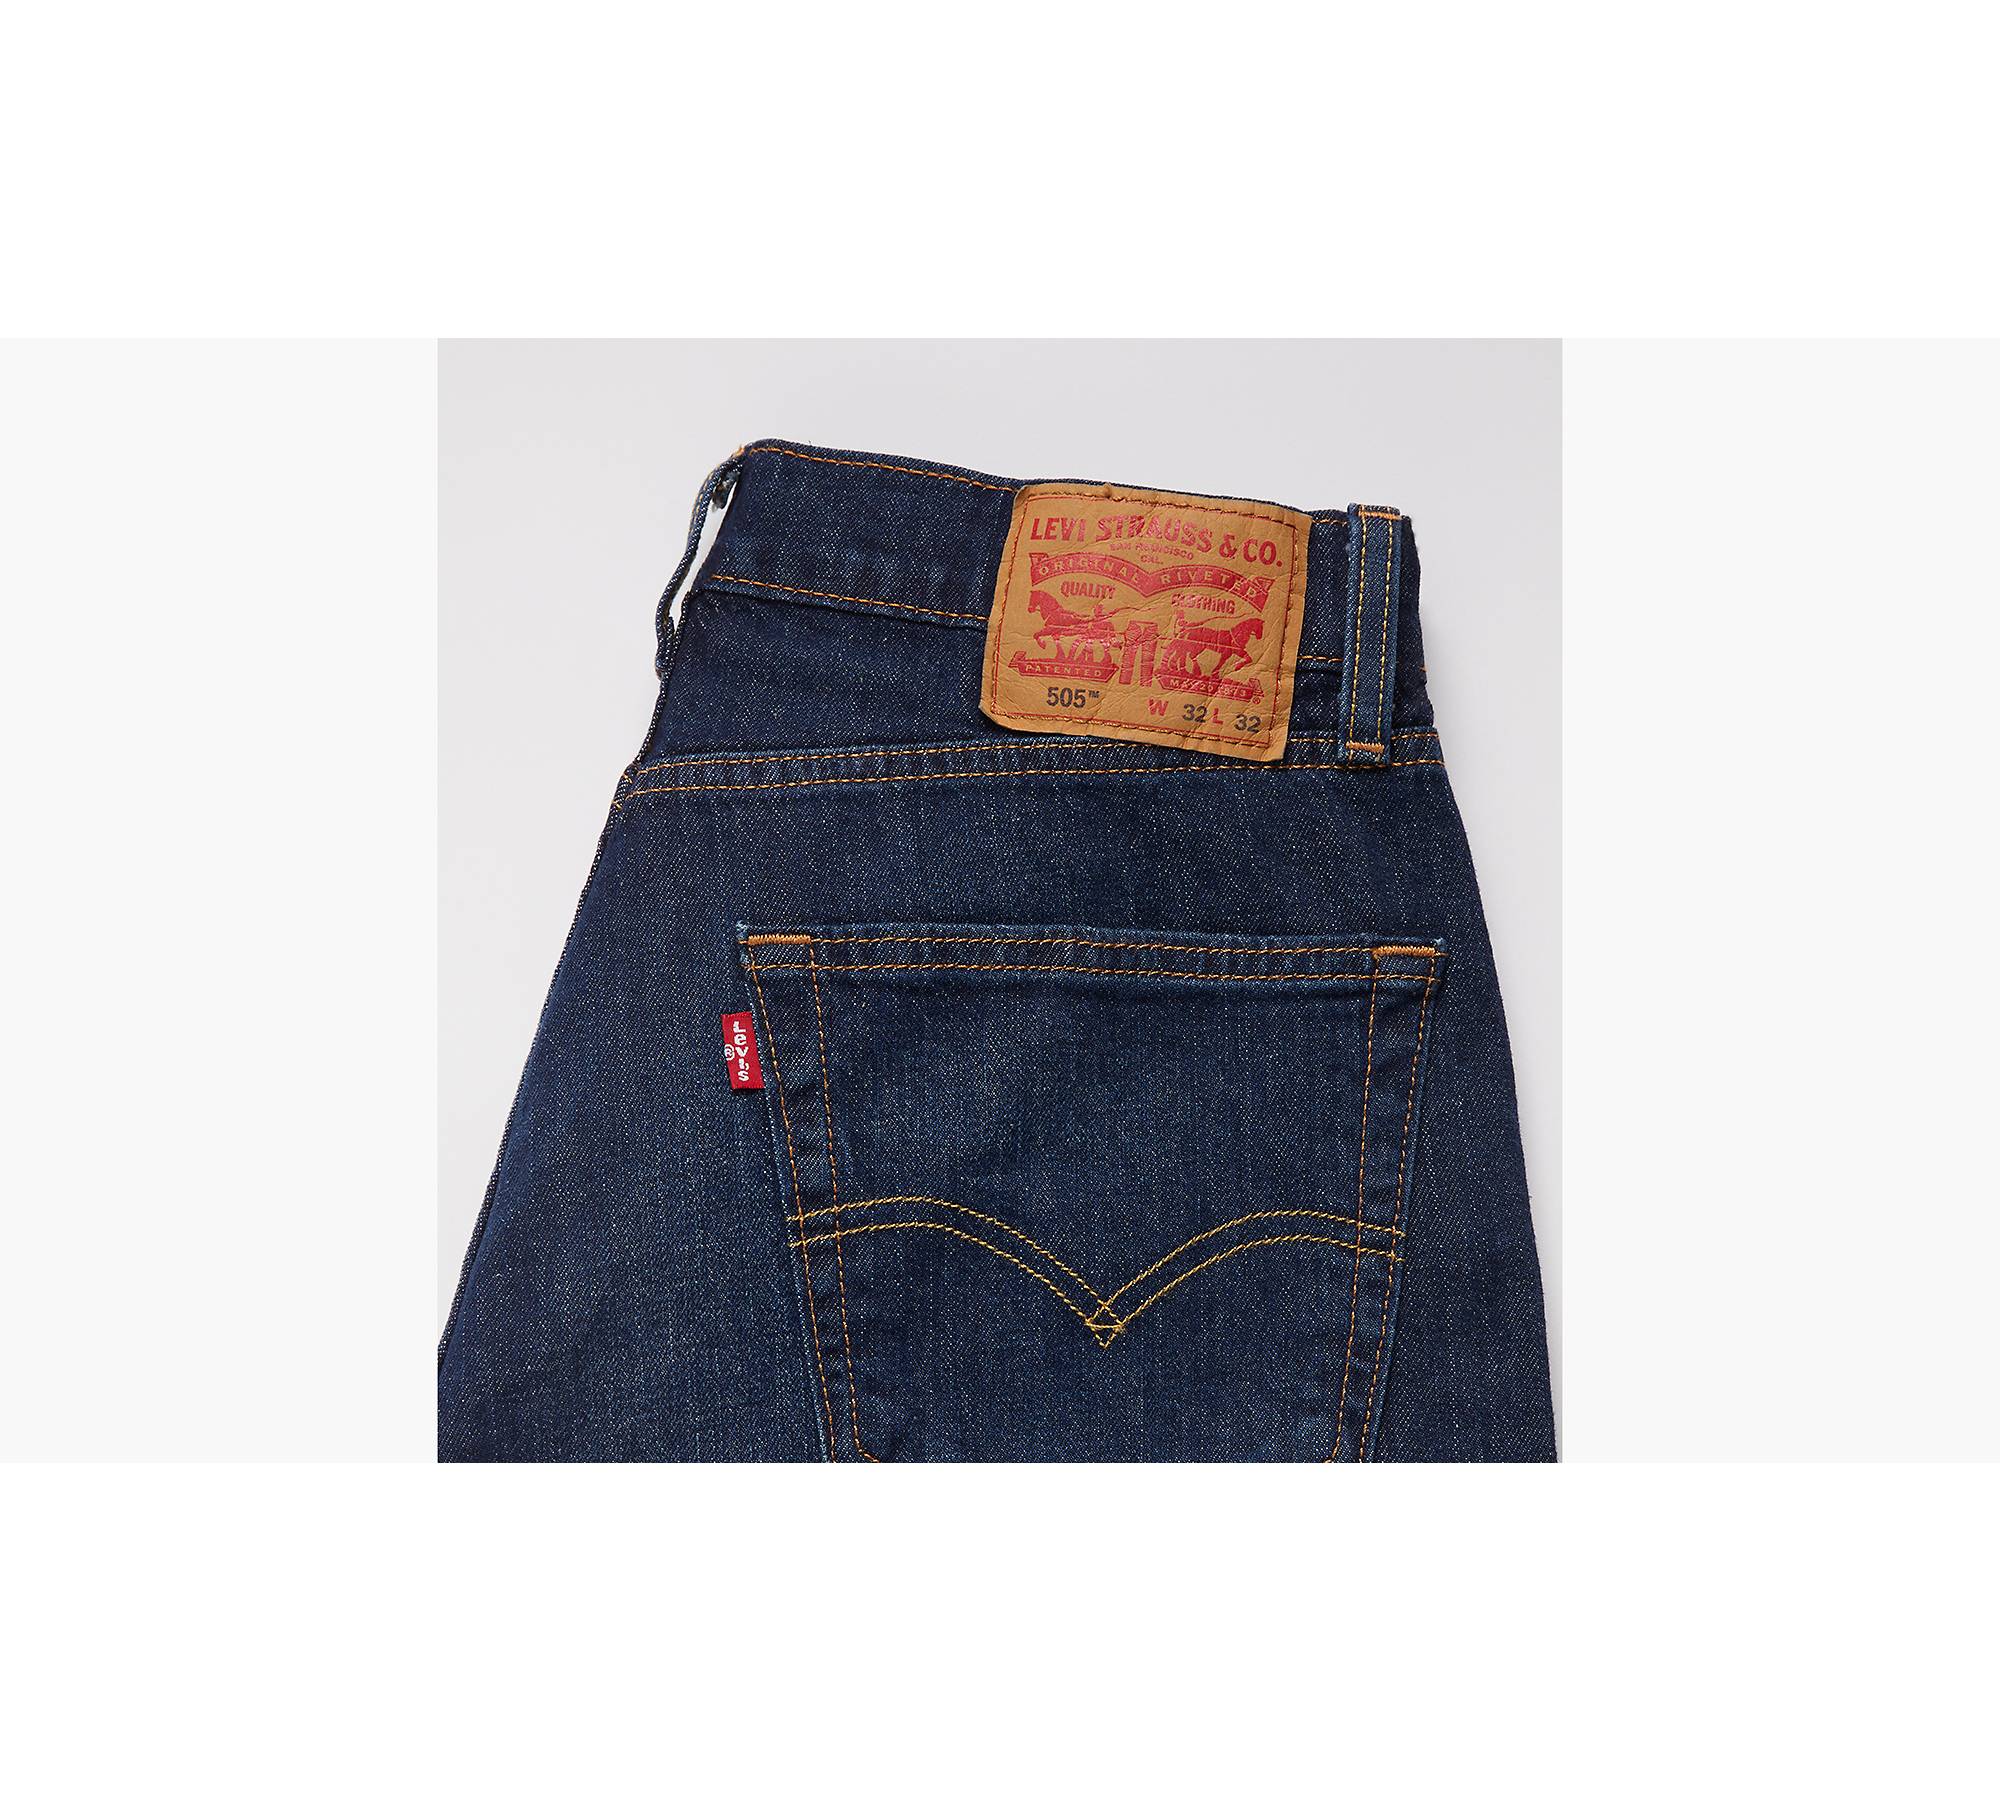 Calça Jeans Levis Masculina Corte Tradicional - Ref. 505-0008 - FIDALGOS